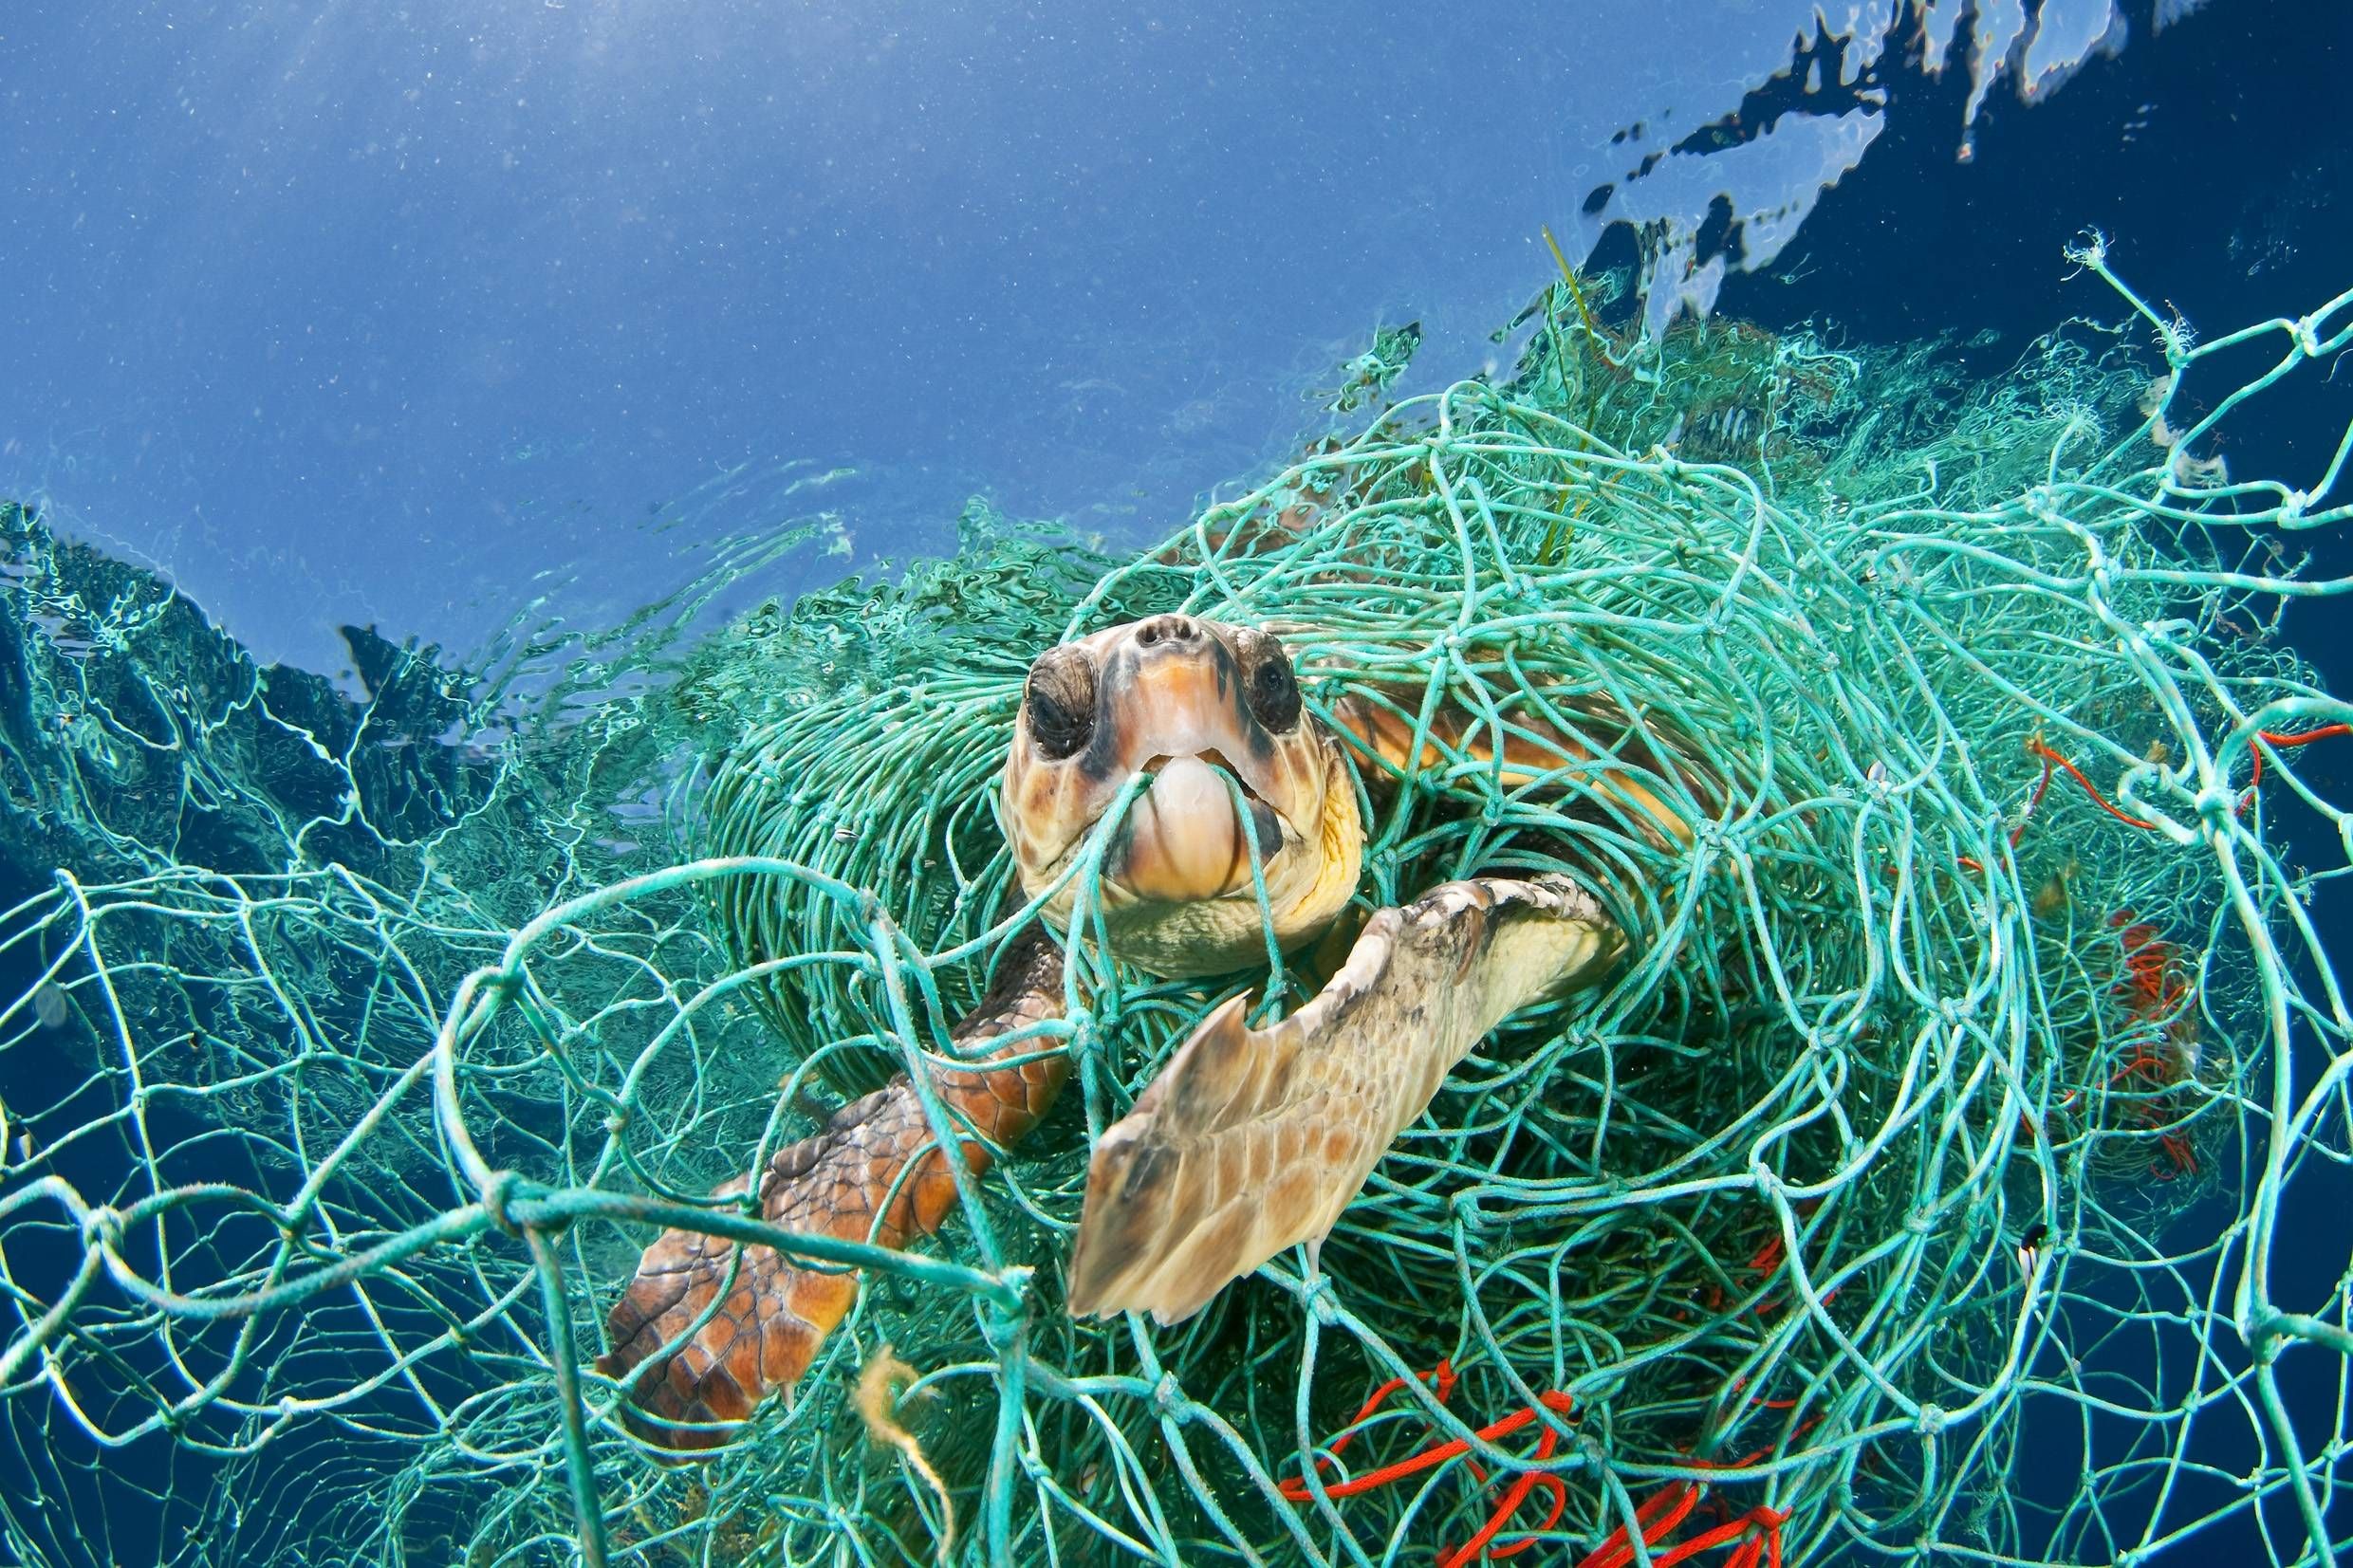 Tortuga enrededa en red de pesca | INK | Pinterest | Fish nets ...